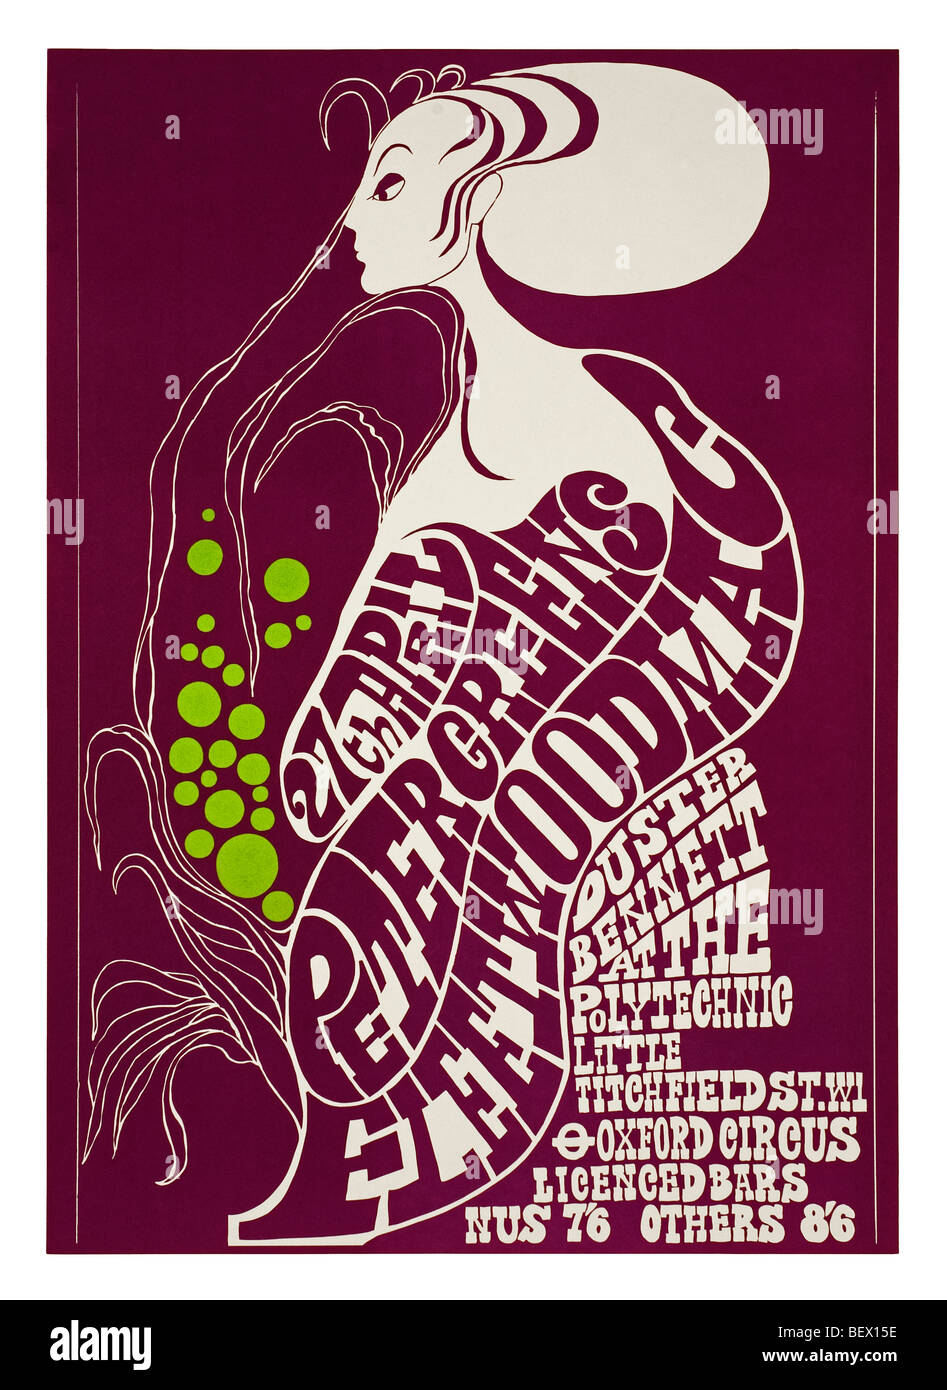 Plakat für Peter Green's Fleetwood Mac am London Polytechnikum in 1967 Stockfoto